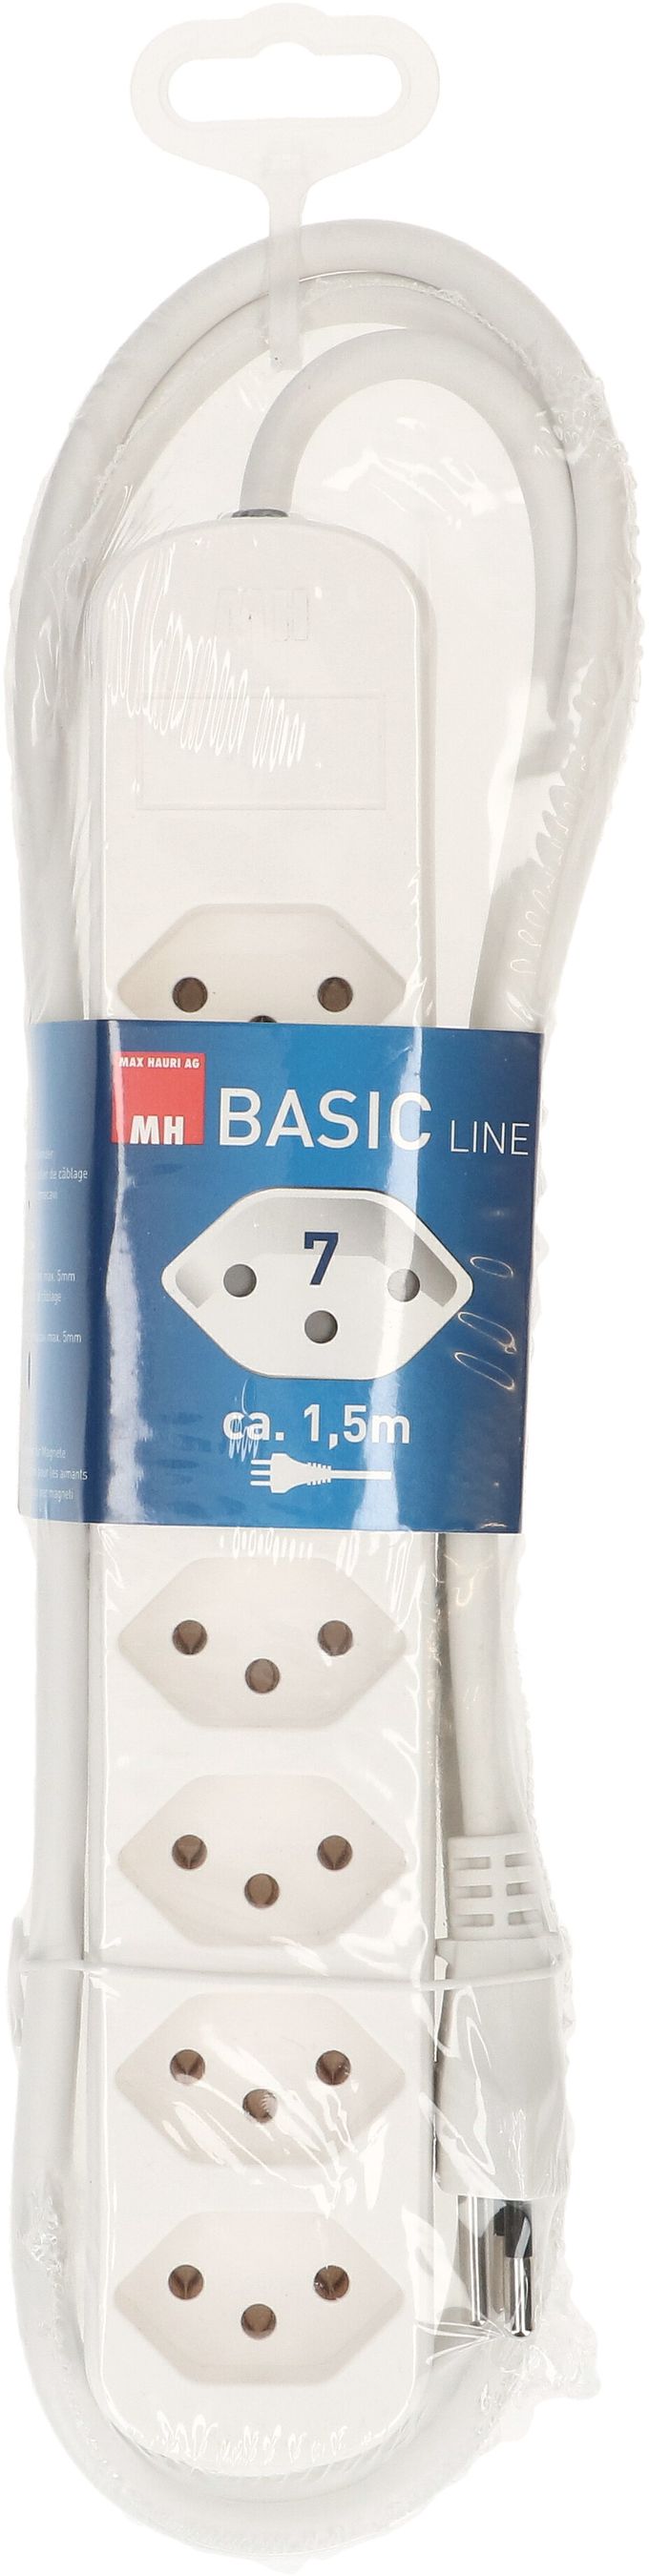 multipresa Basic Line 7x tipo 13 bianco 1.5m